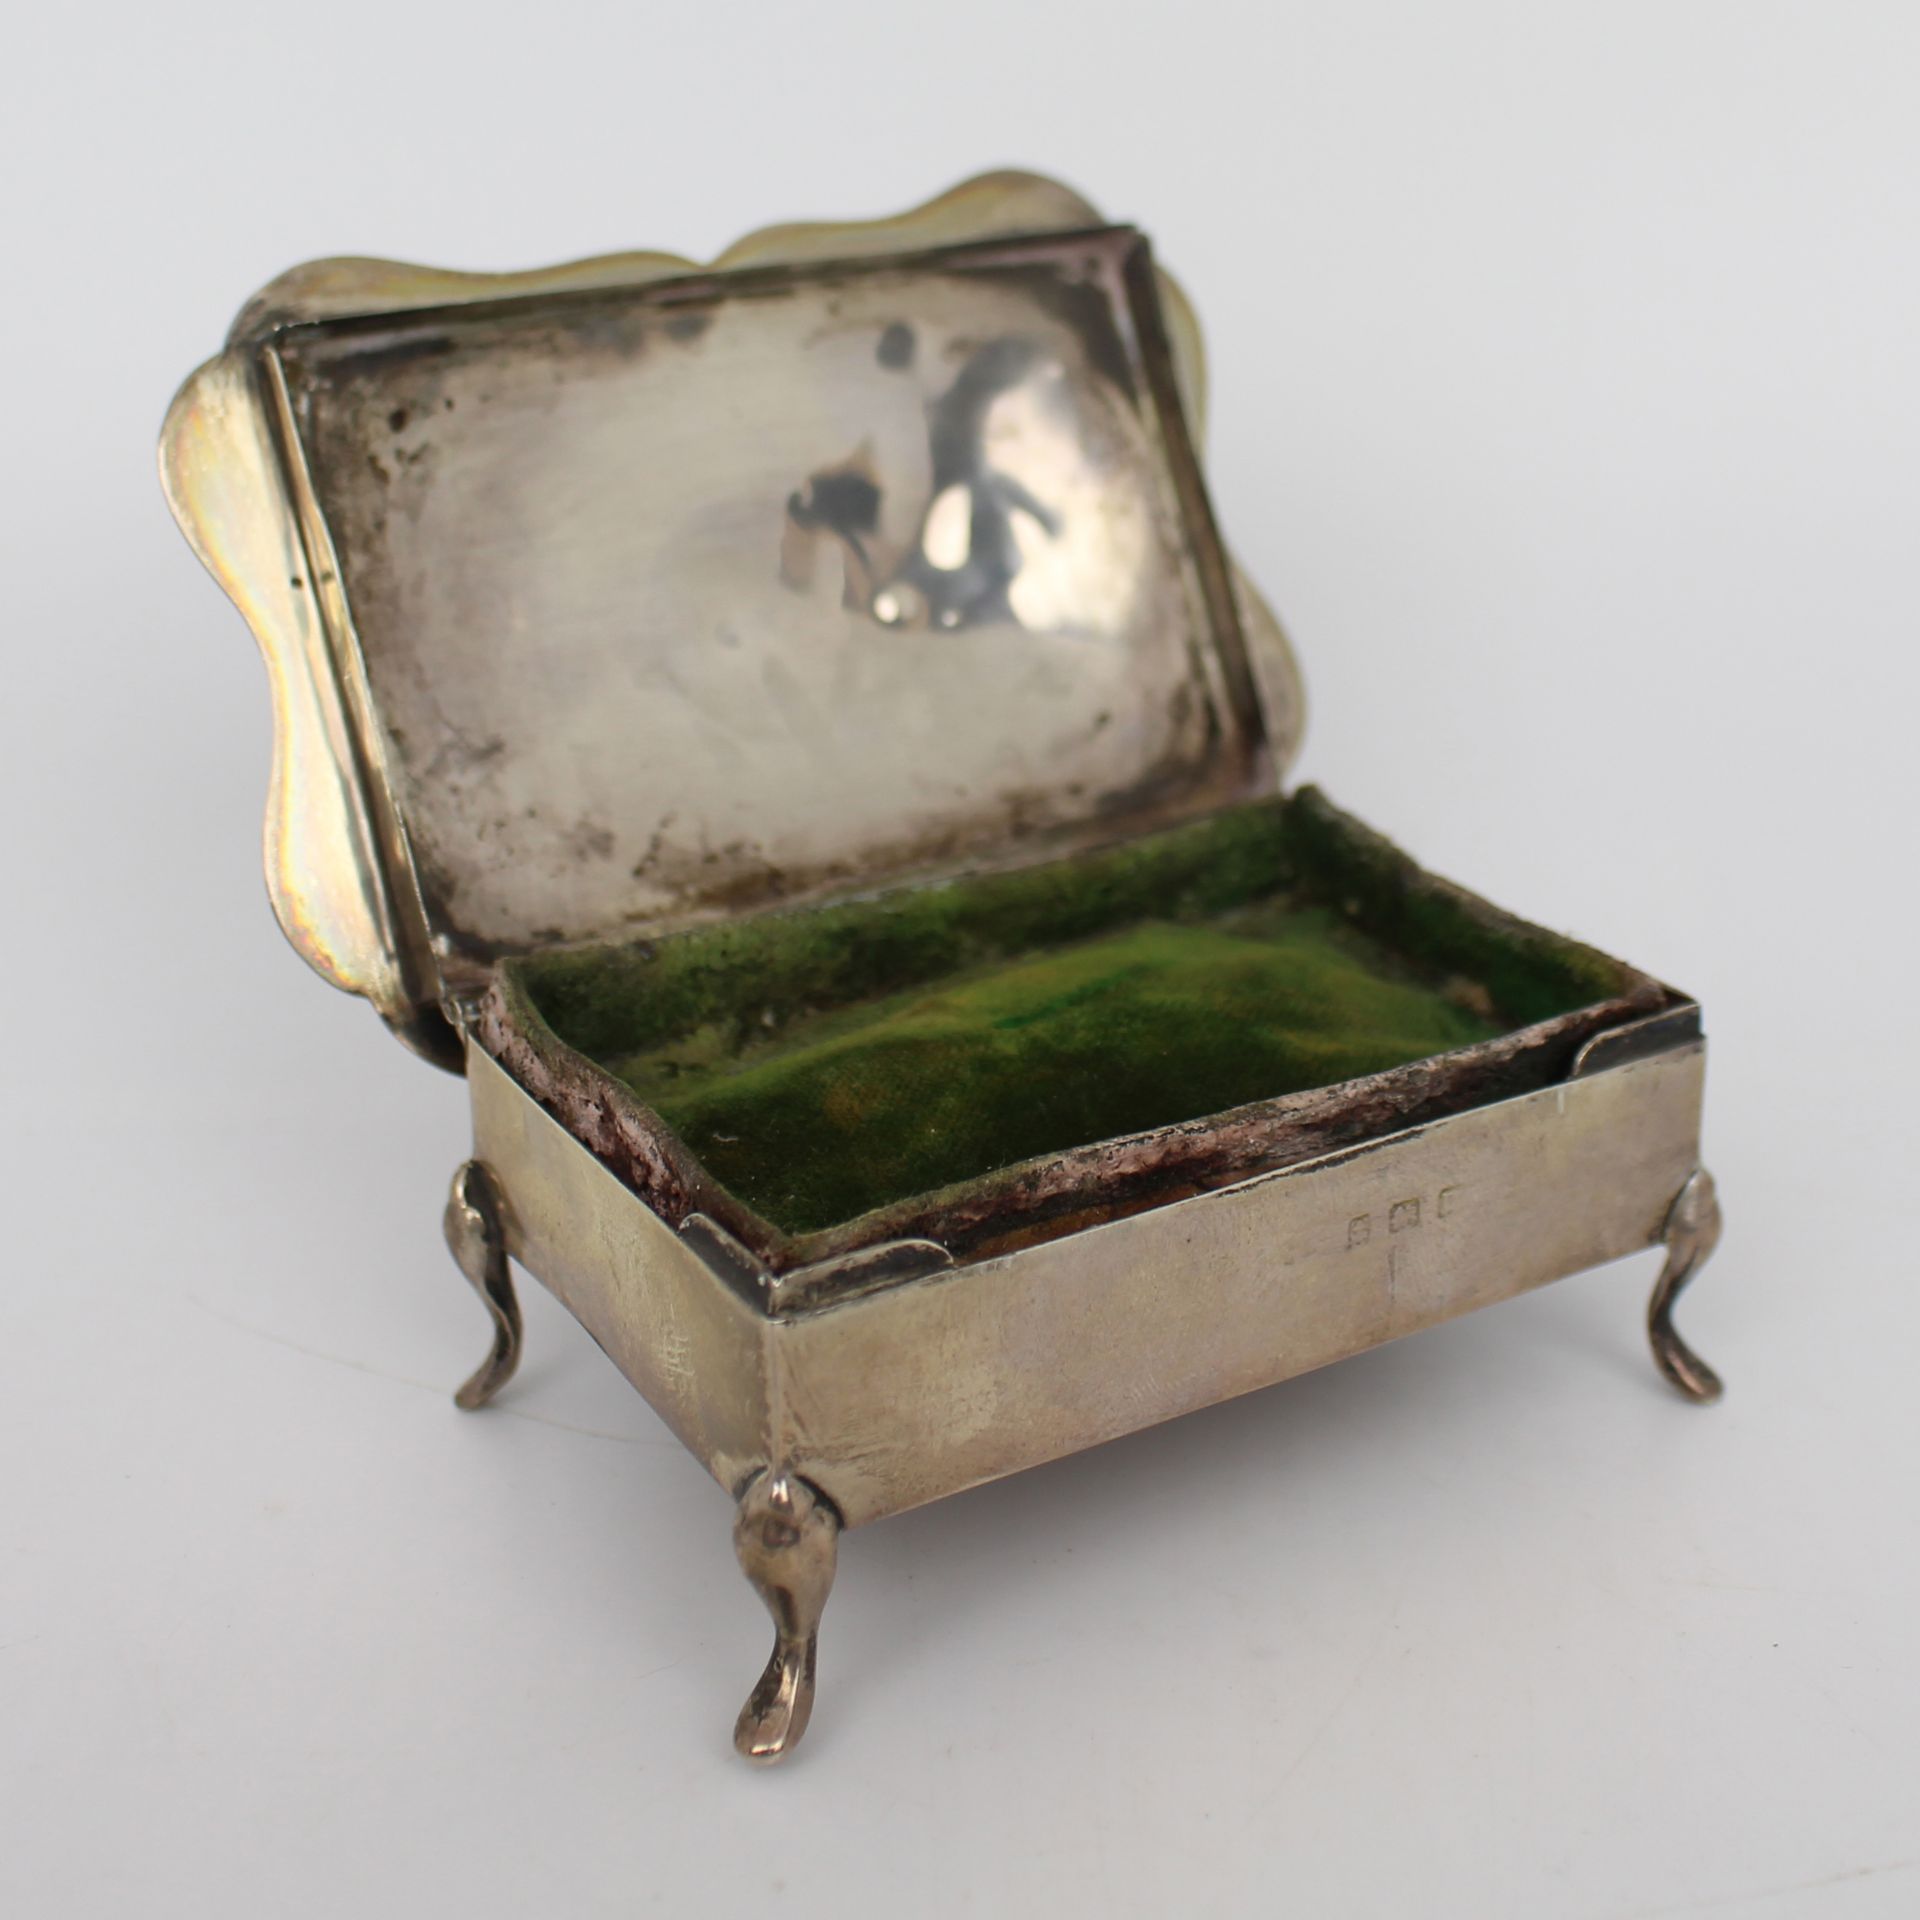 Solid Silver Pin Cushion Box Birmingham 1912